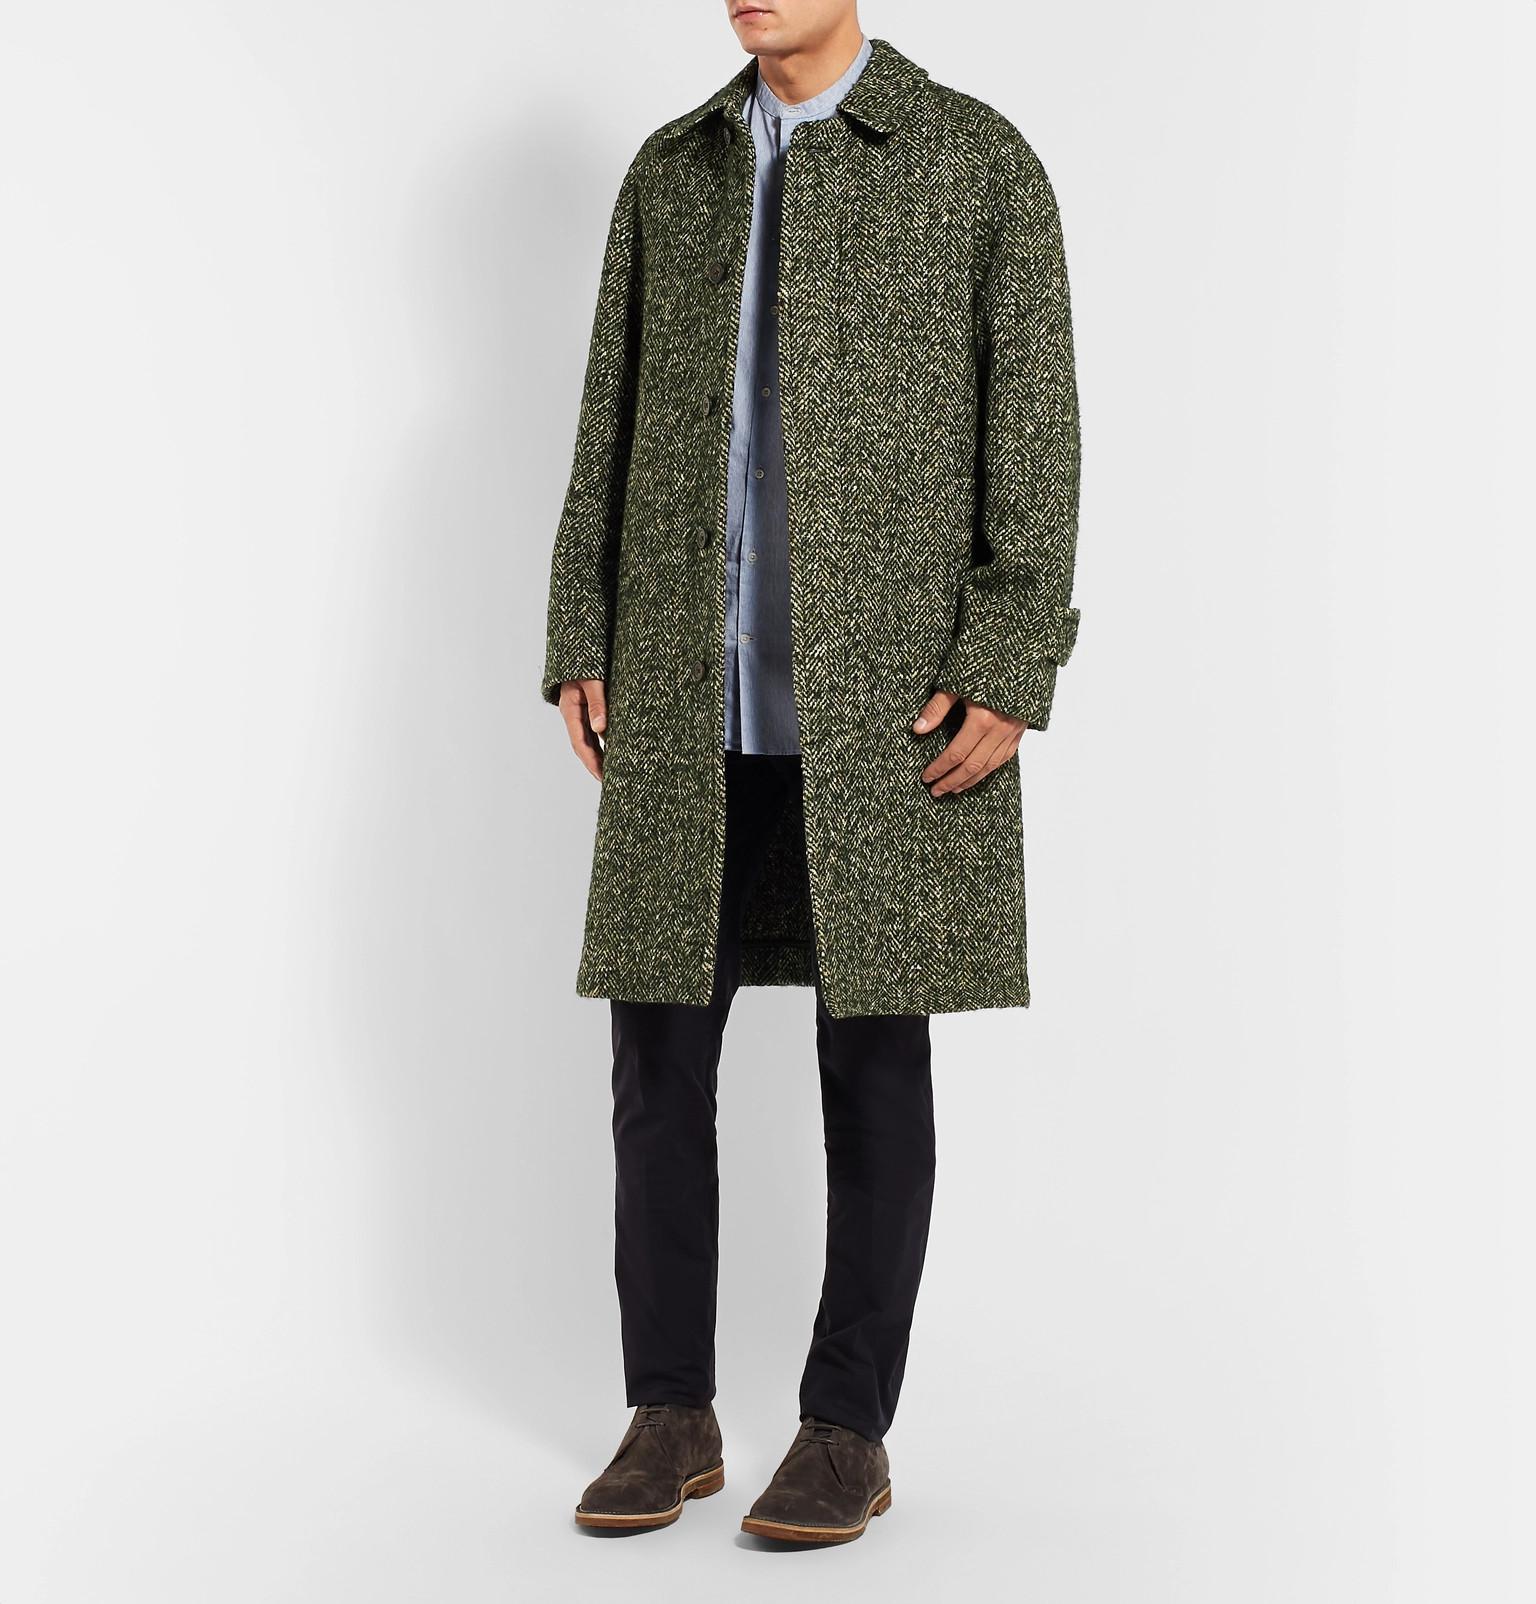 Drake's Herringbone Wool Coat in Green for Men - Lyst